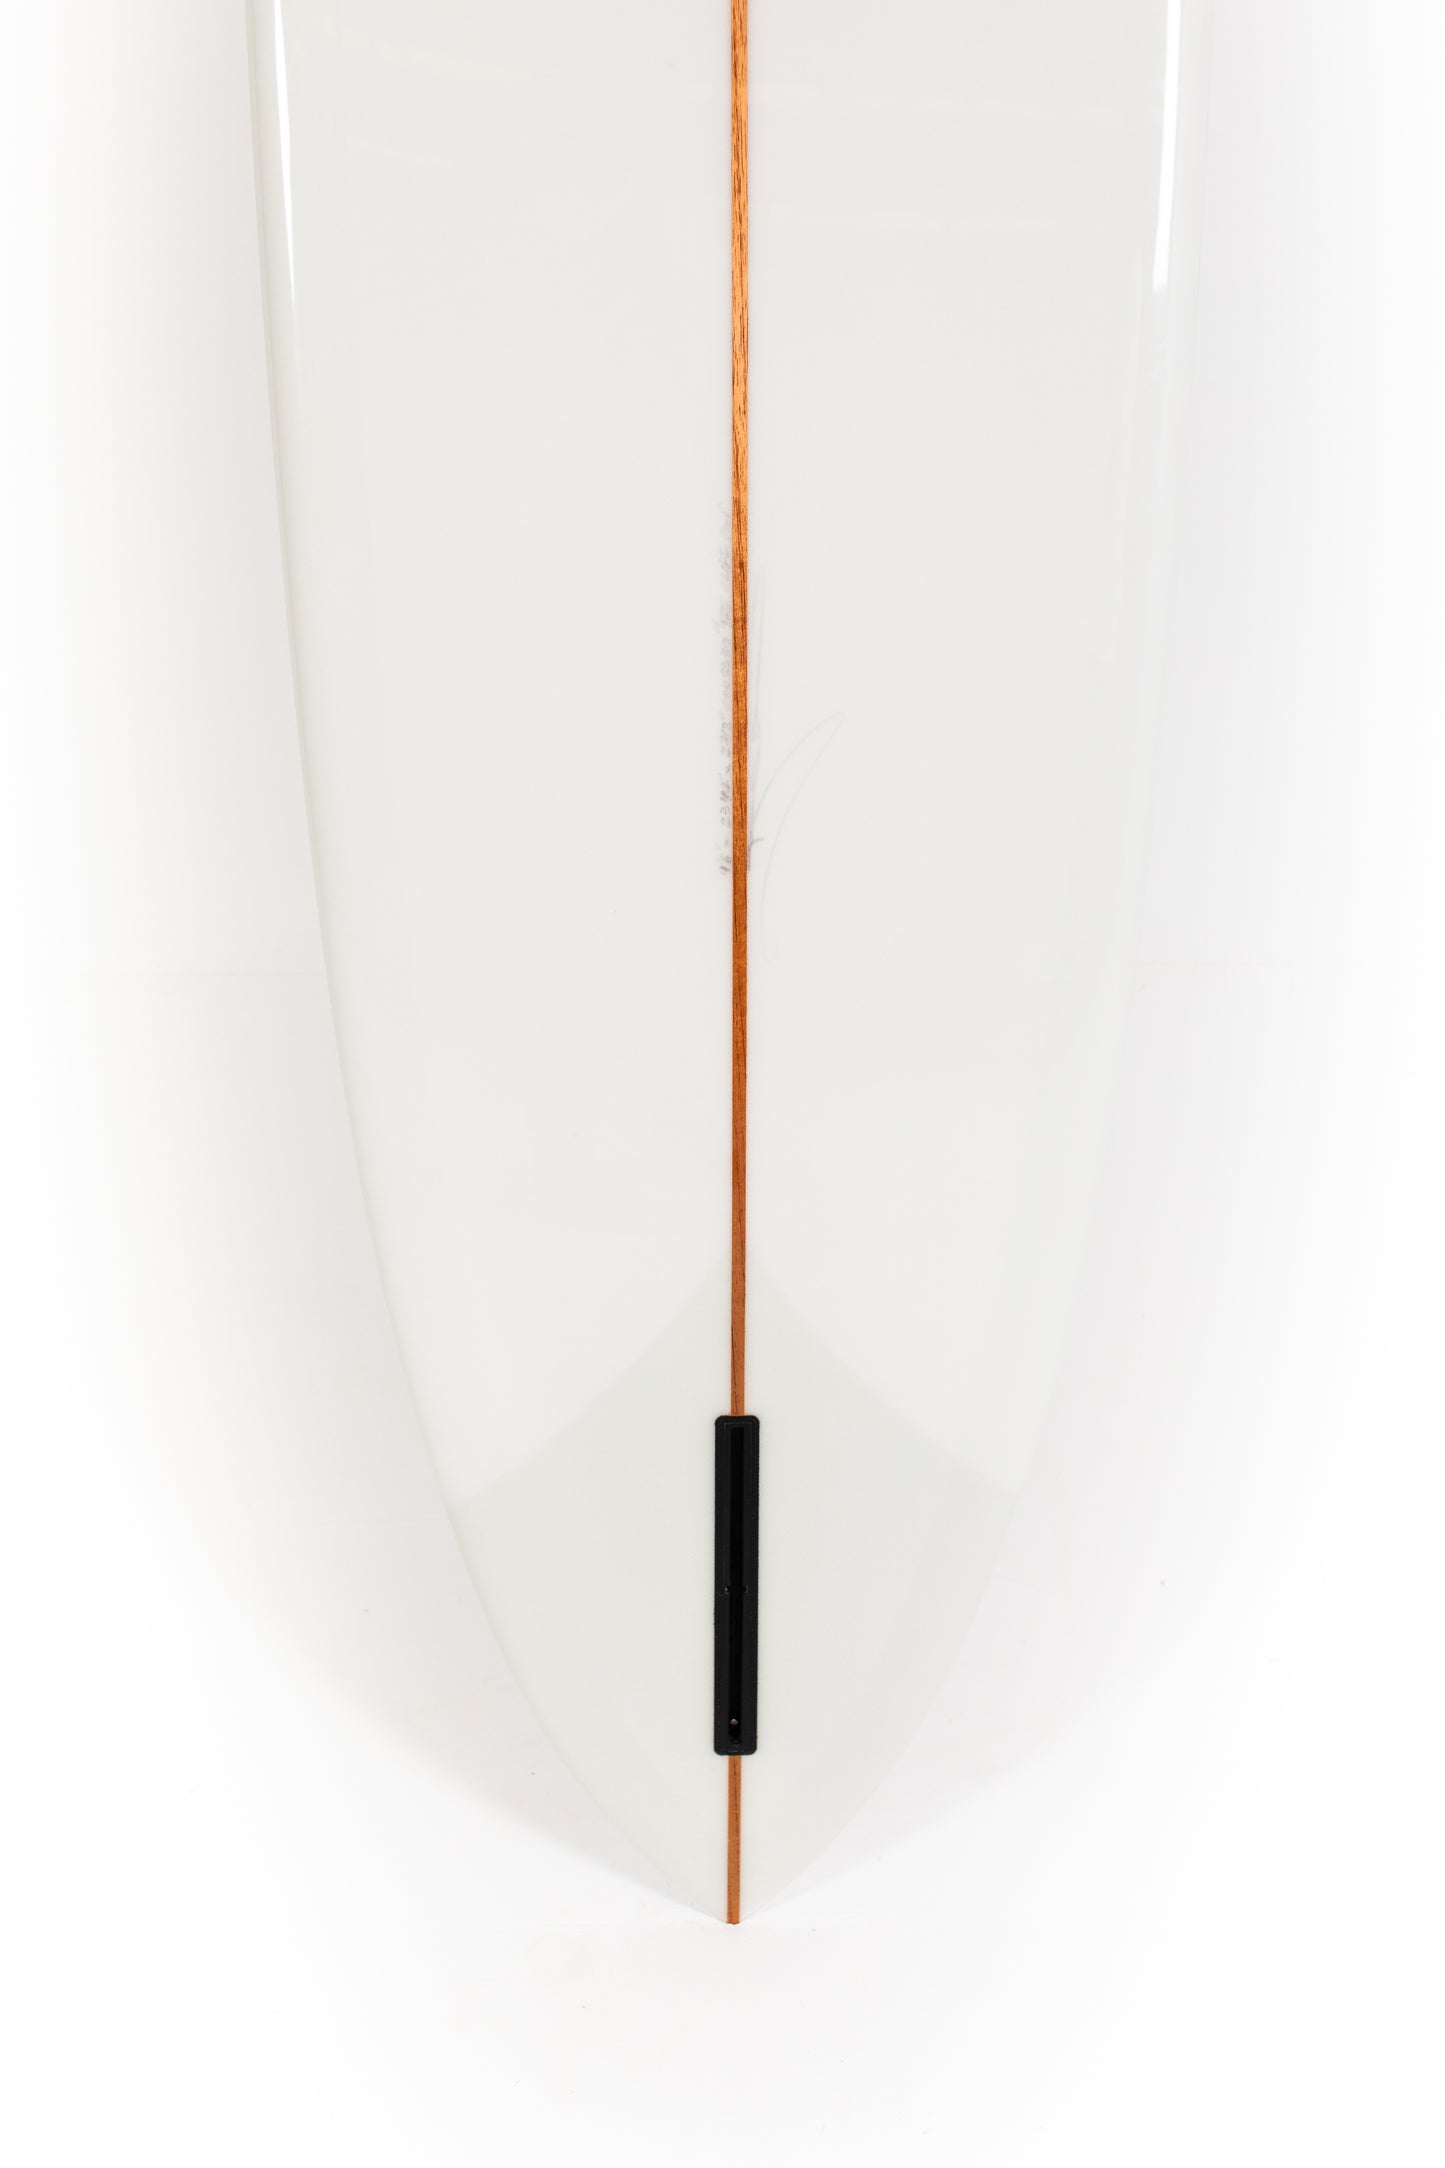 
                  
                    Pukas Surf Shop - Christenson Surfboard  - THE CLIFF PINTAIL by Chris Christenson - 9'6” x 23 1/4 x 2 7/8 - CX05339
                  
                